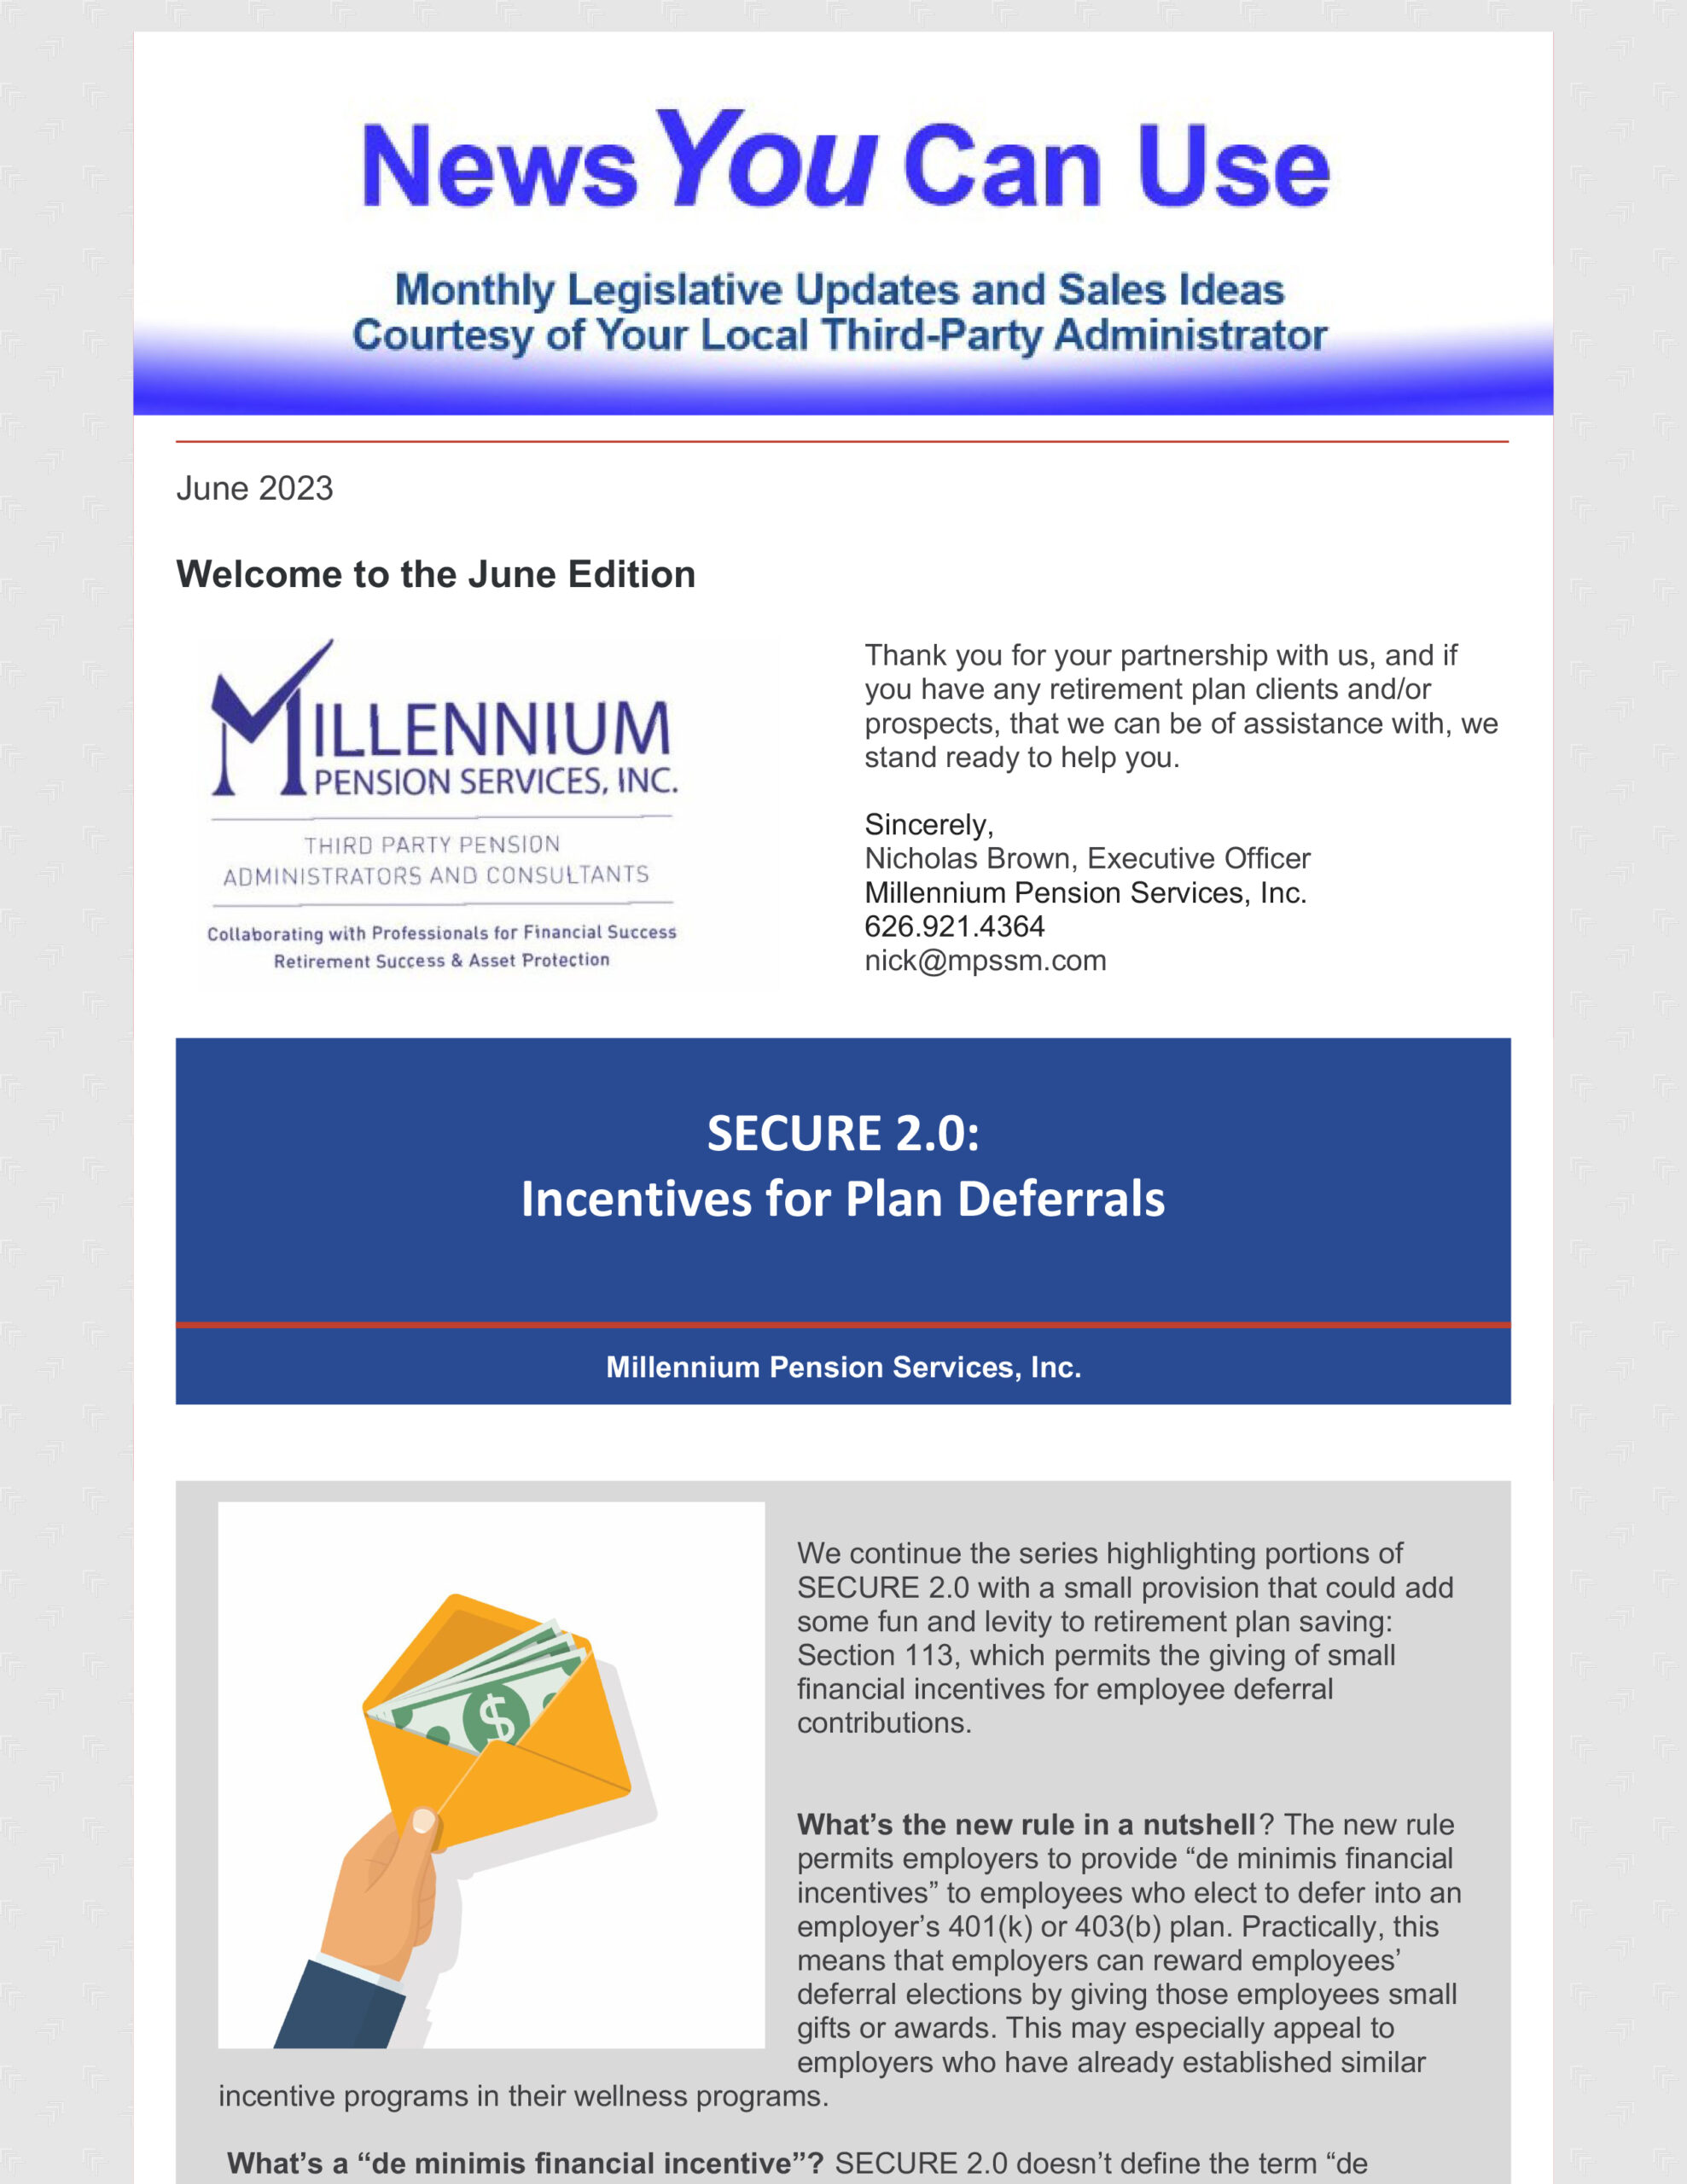 June 2023 newsletter for  Millennium Pension Services 